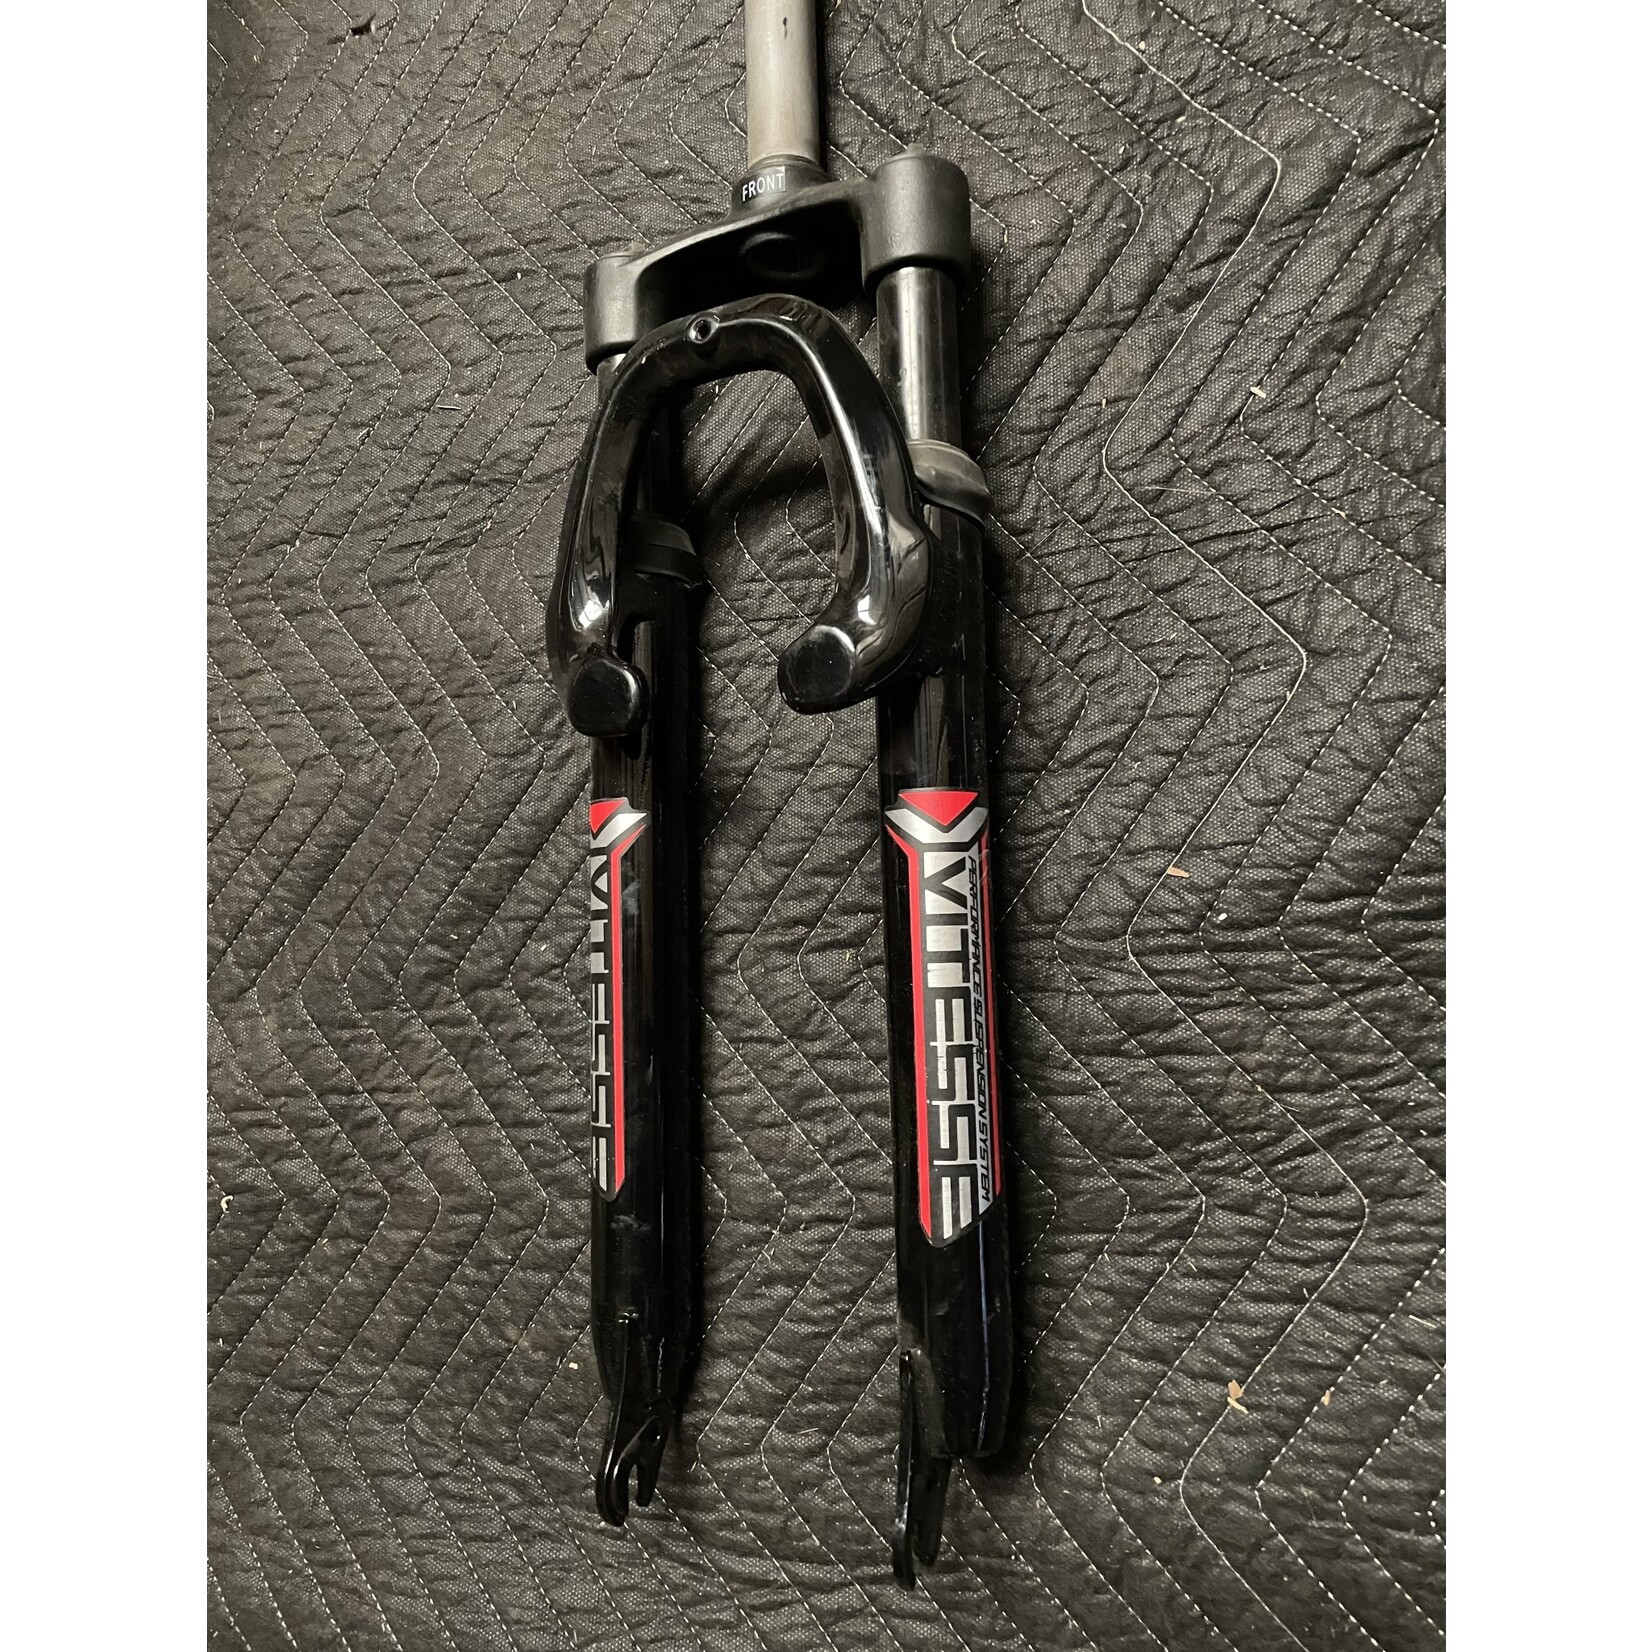 Vitesse 29” 1" Threadless Suspension Bicycle Fork 7 3/4” Steer Tube (Black & Red)